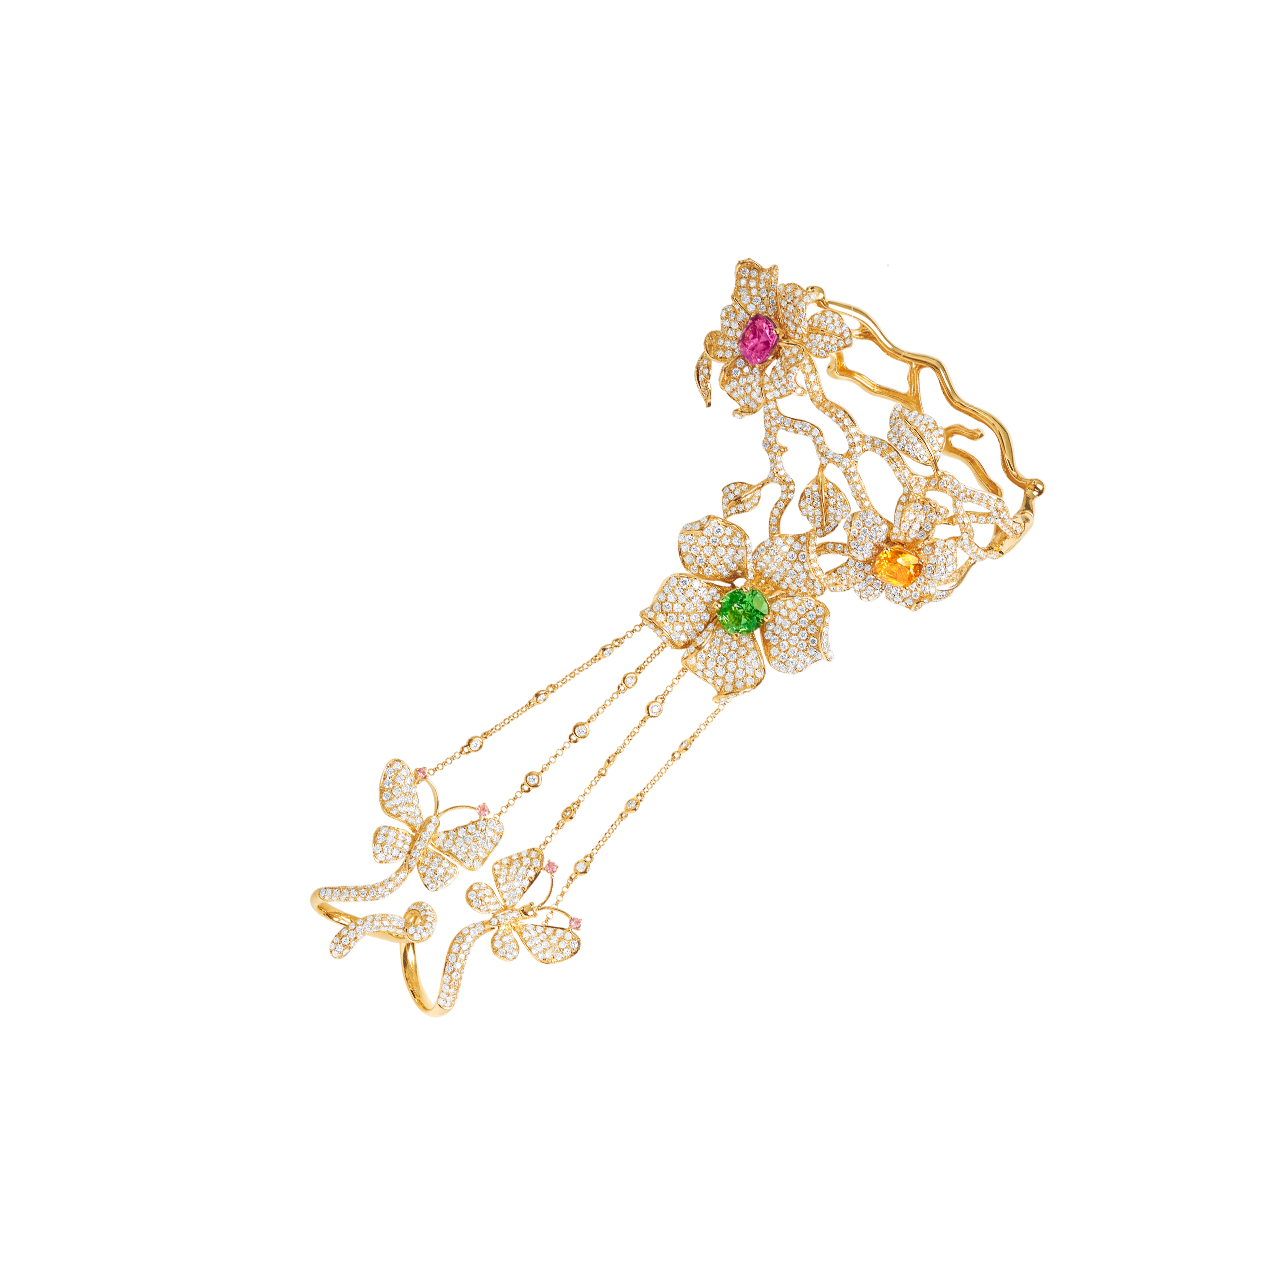 桐花彩寶鑽石戒鍊手環 69.94公克
Tung Blossom Festival Multi - 
Colored Gemstone And
Diamond Ring / Bracelet